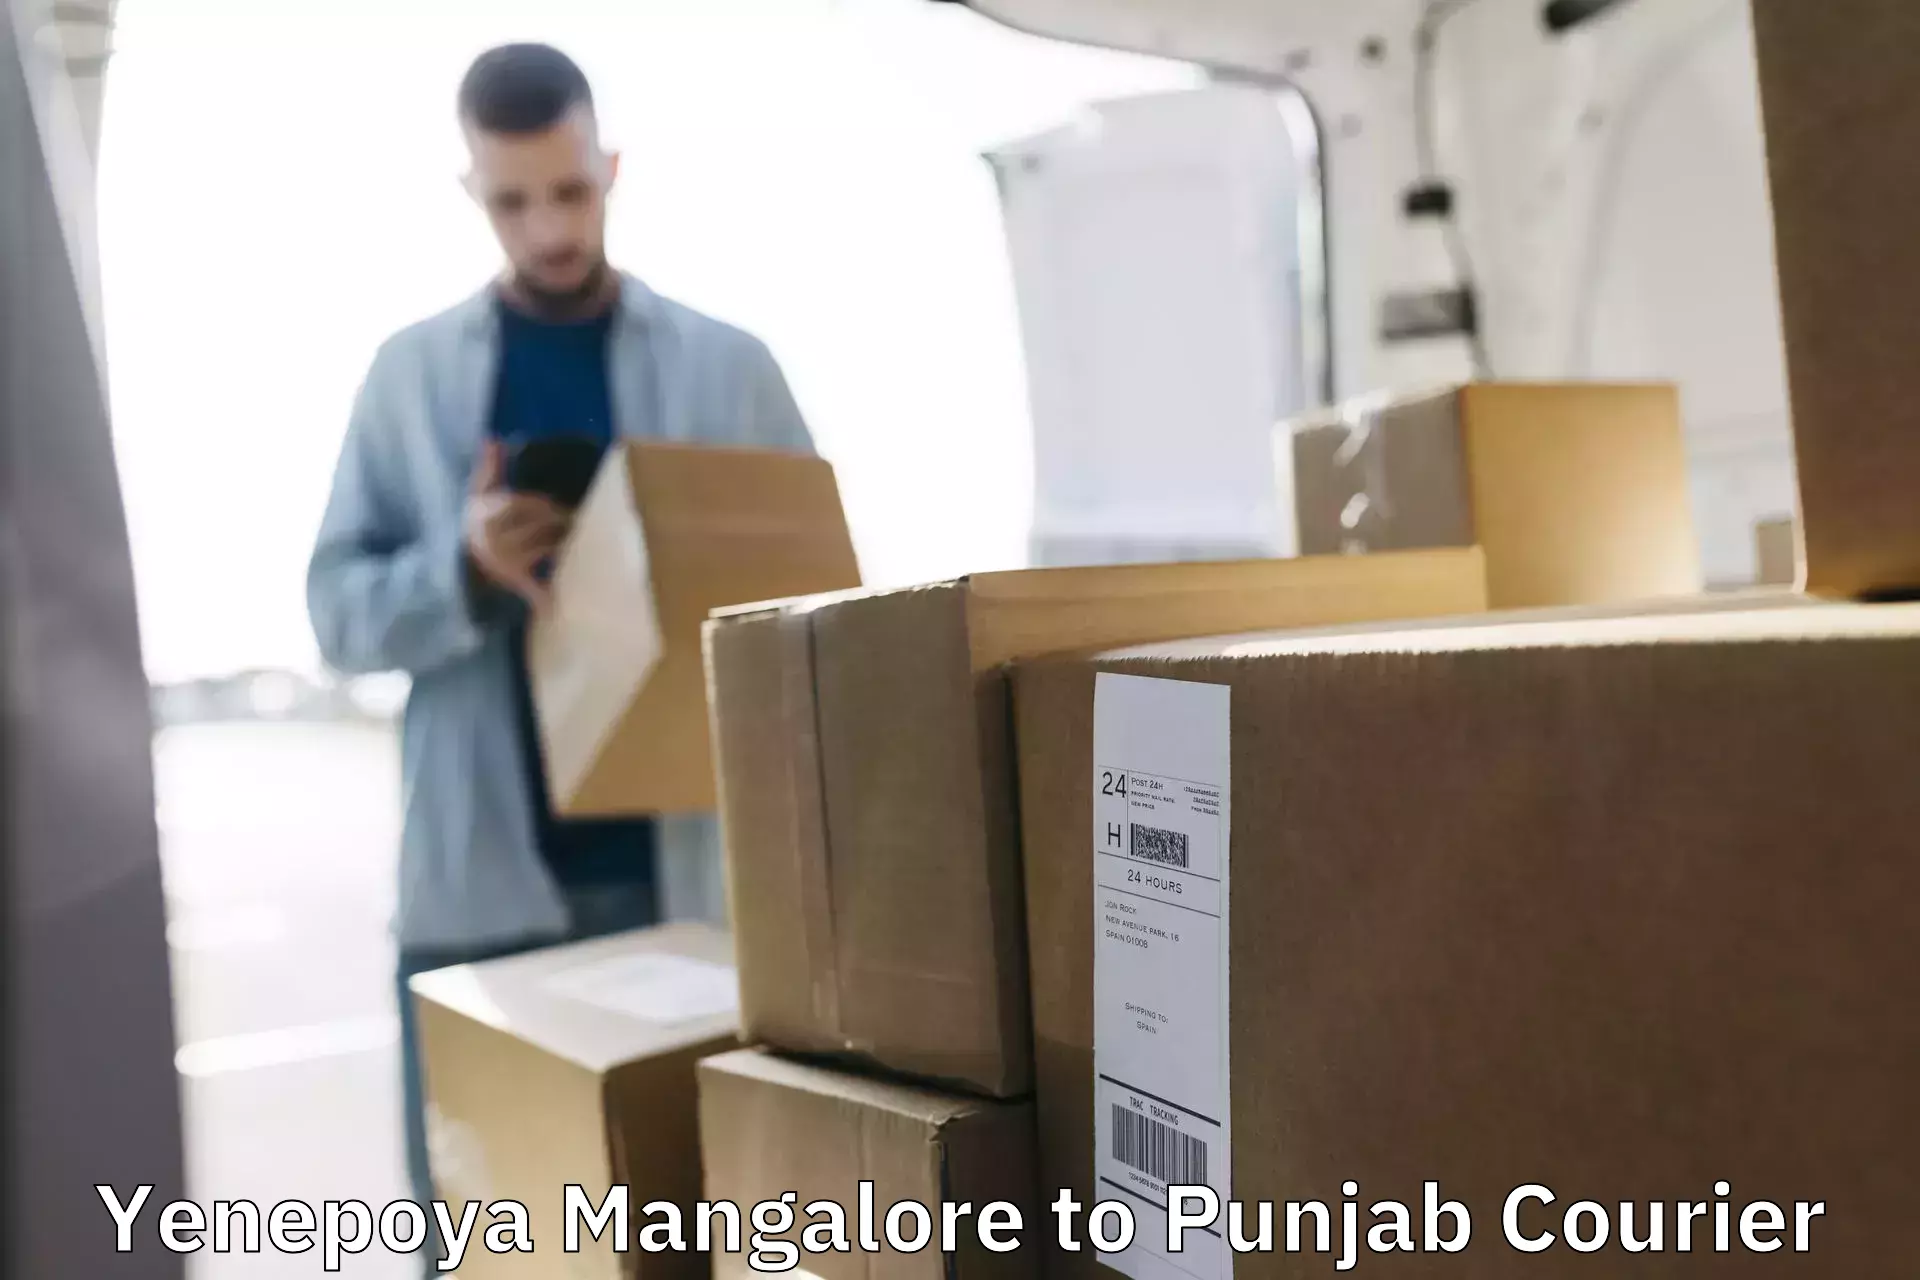 Reliable delivery network Yenepoya Mangalore to Punjab